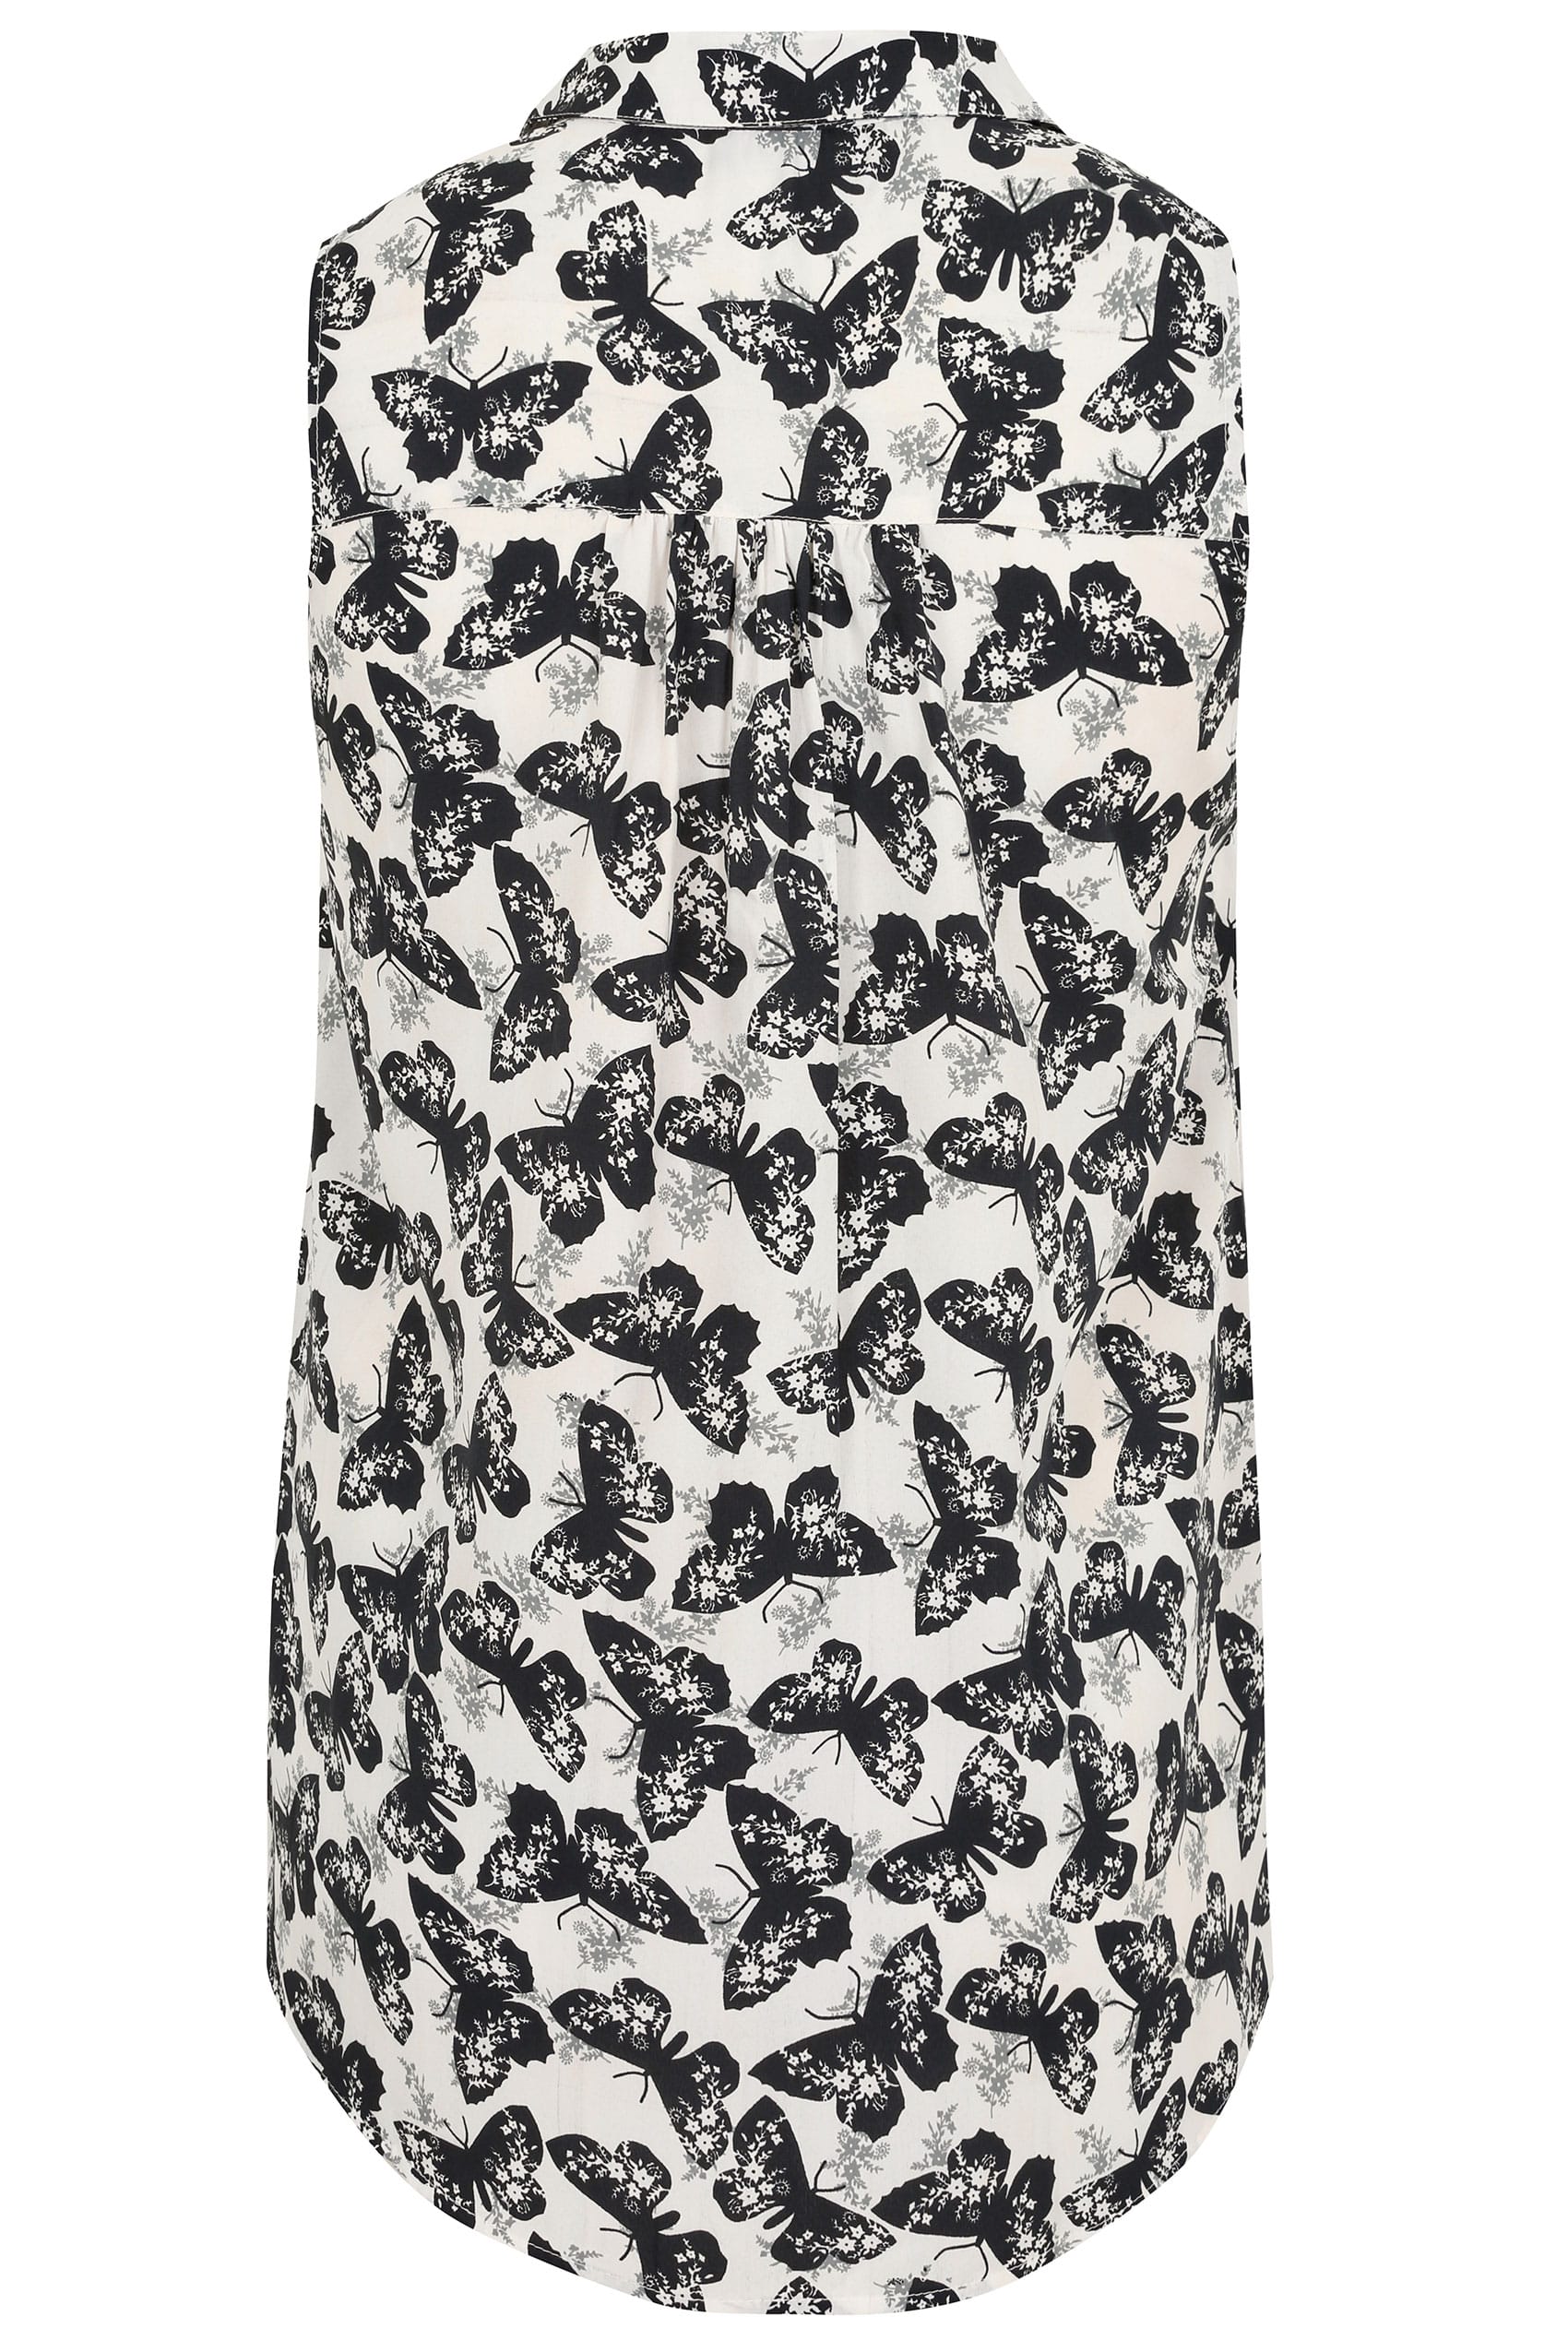 Black & White Butterfly Print Longline Sleeveless Shirt, Plus size 16 to 32